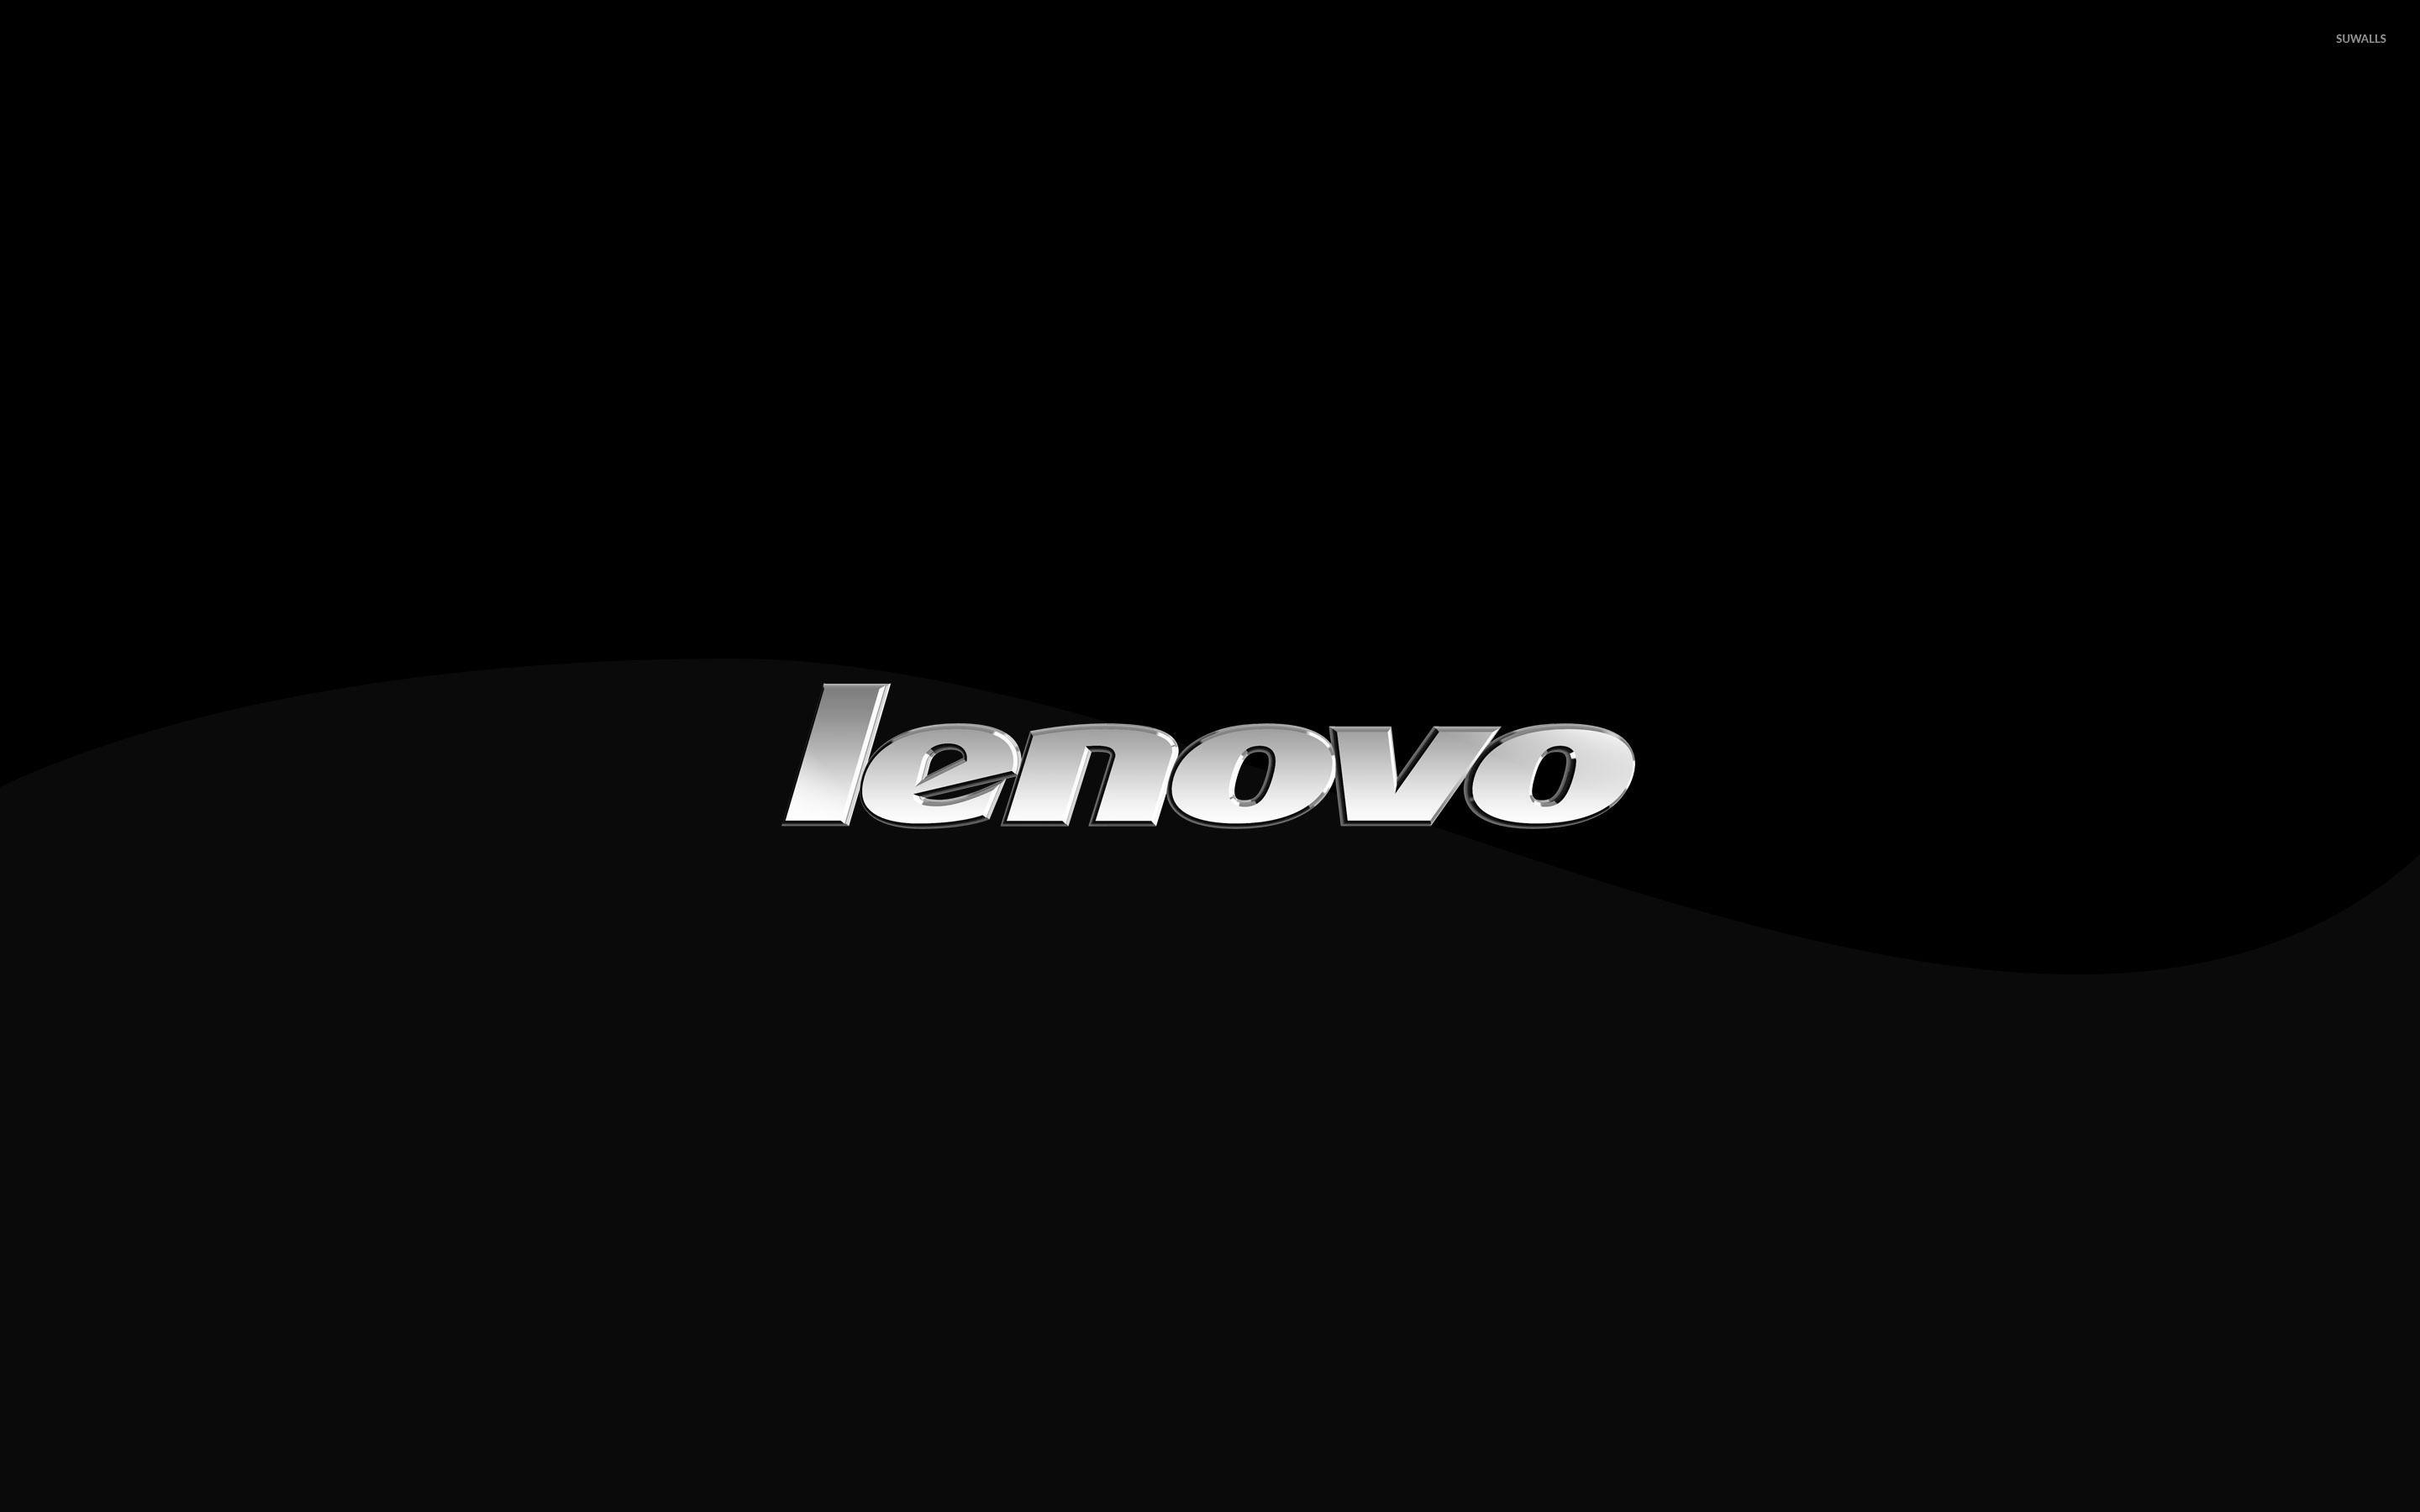 Lenovo Wallpaper 9 X 1800